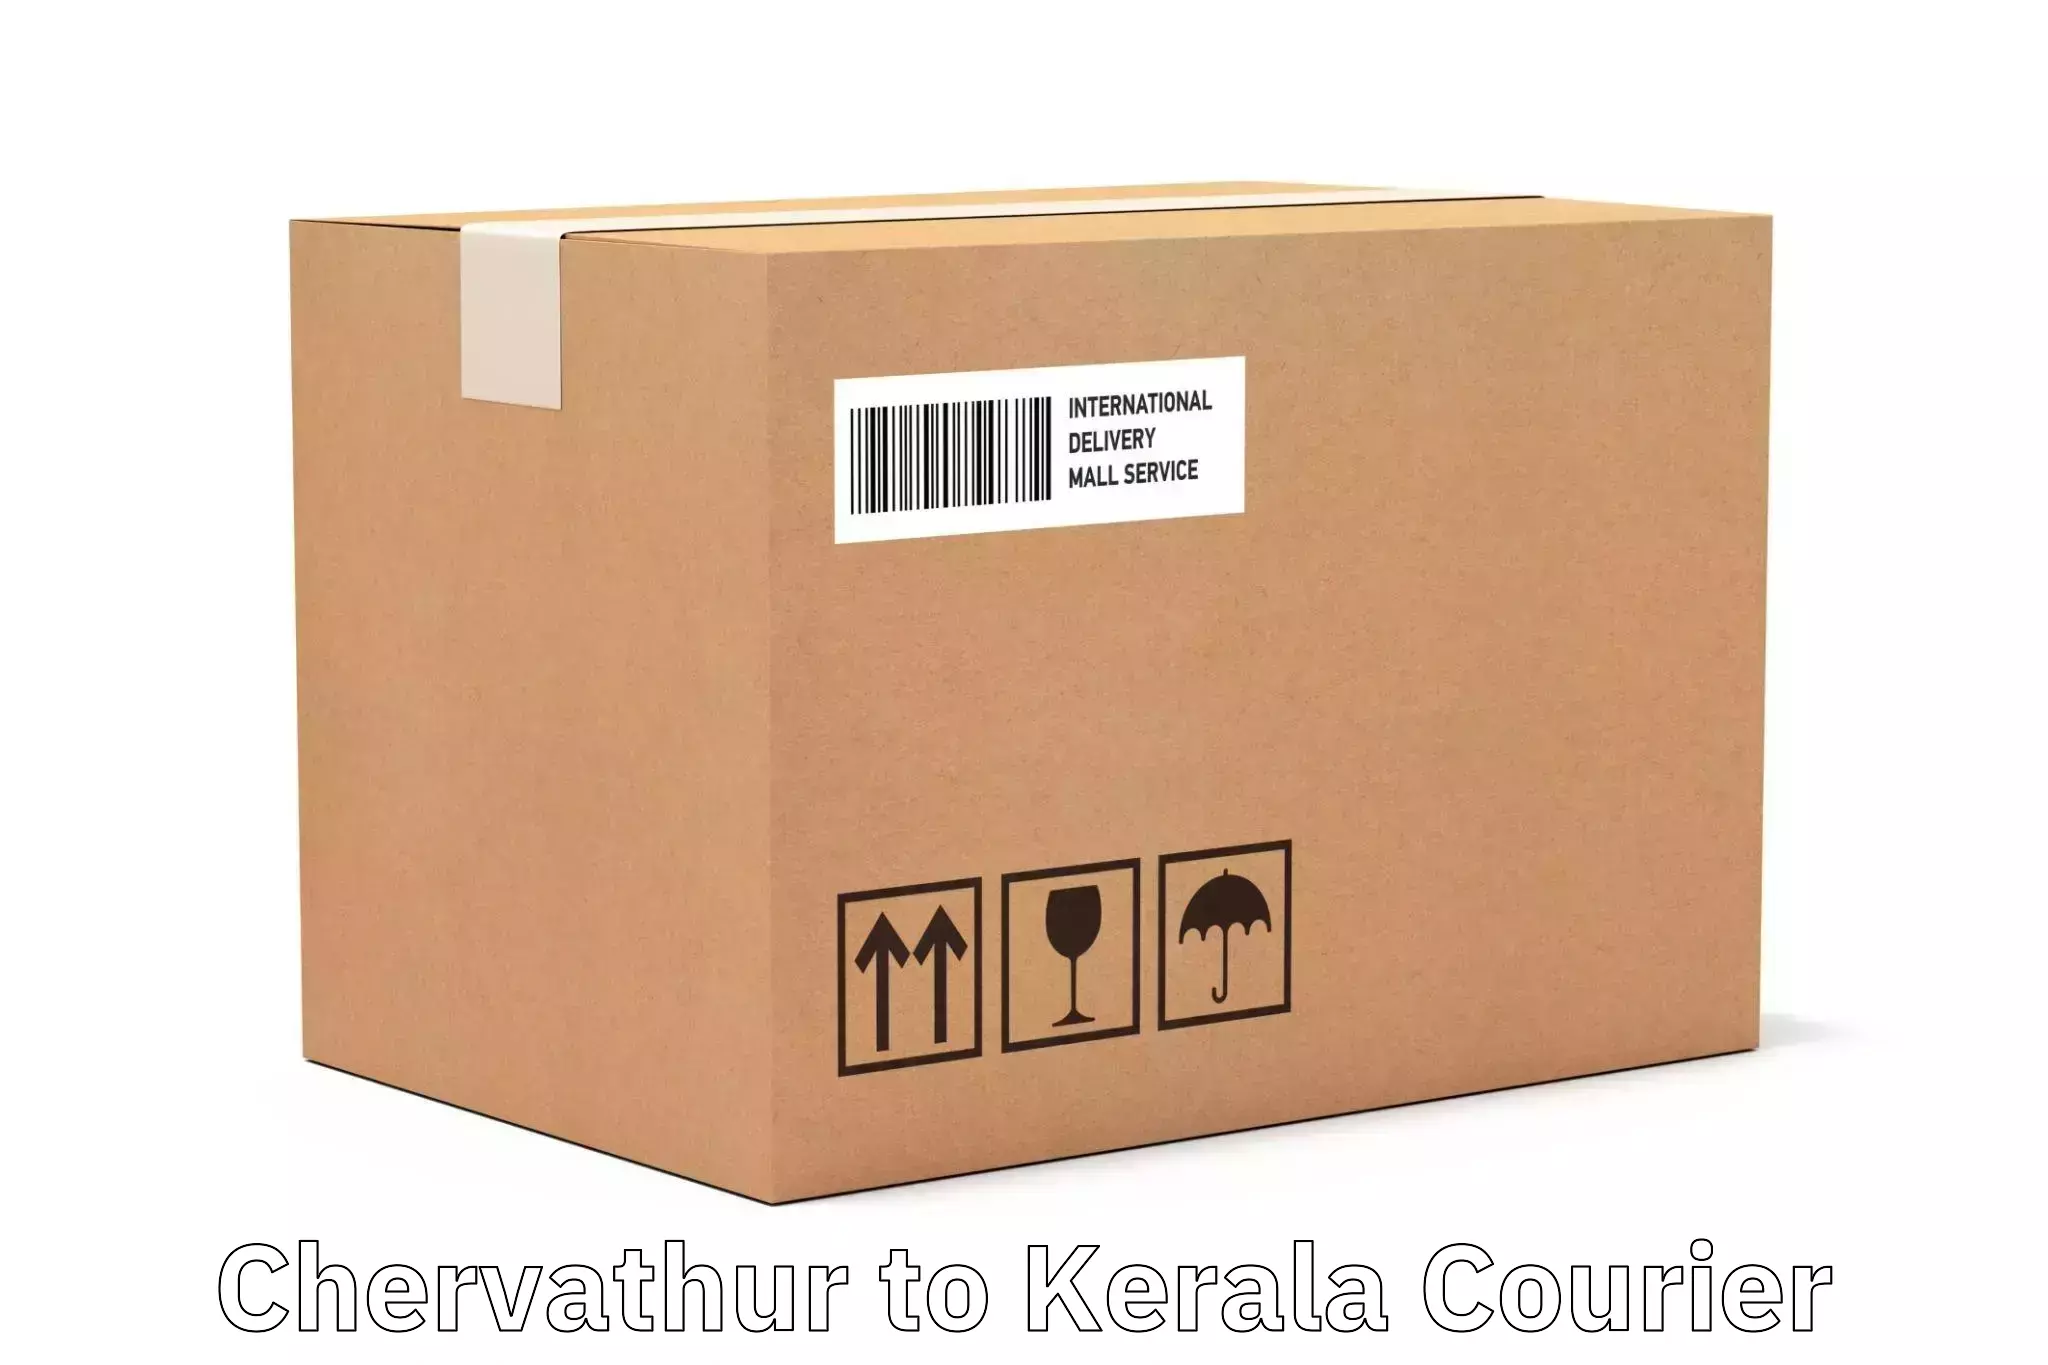 Global logistics network Chervathur to Kodungallur